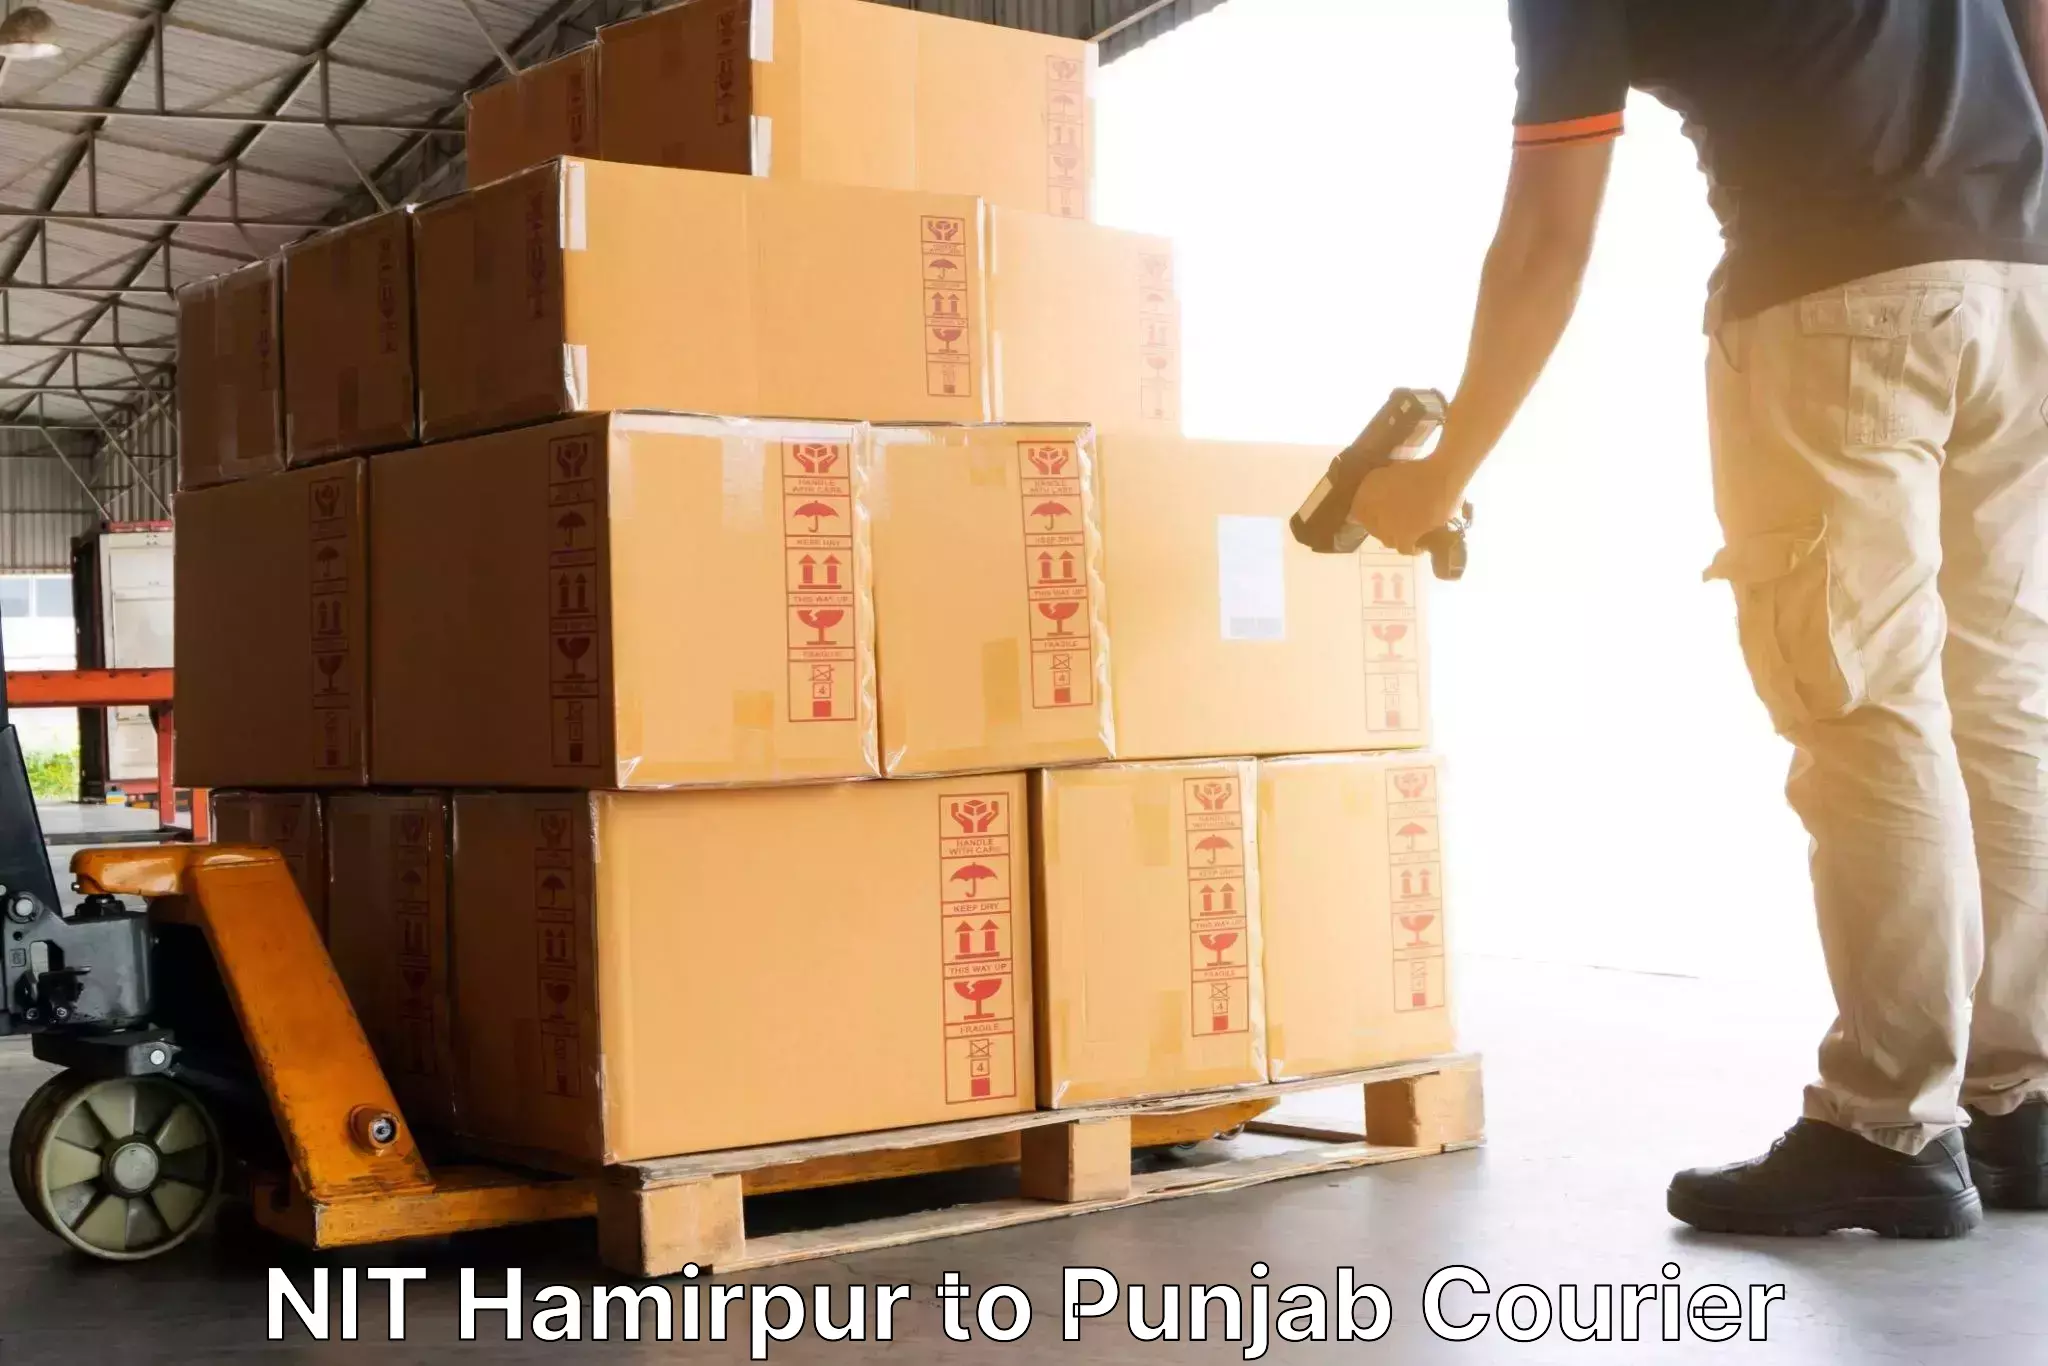 Premium courier services NIT Hamirpur to Zirakpur